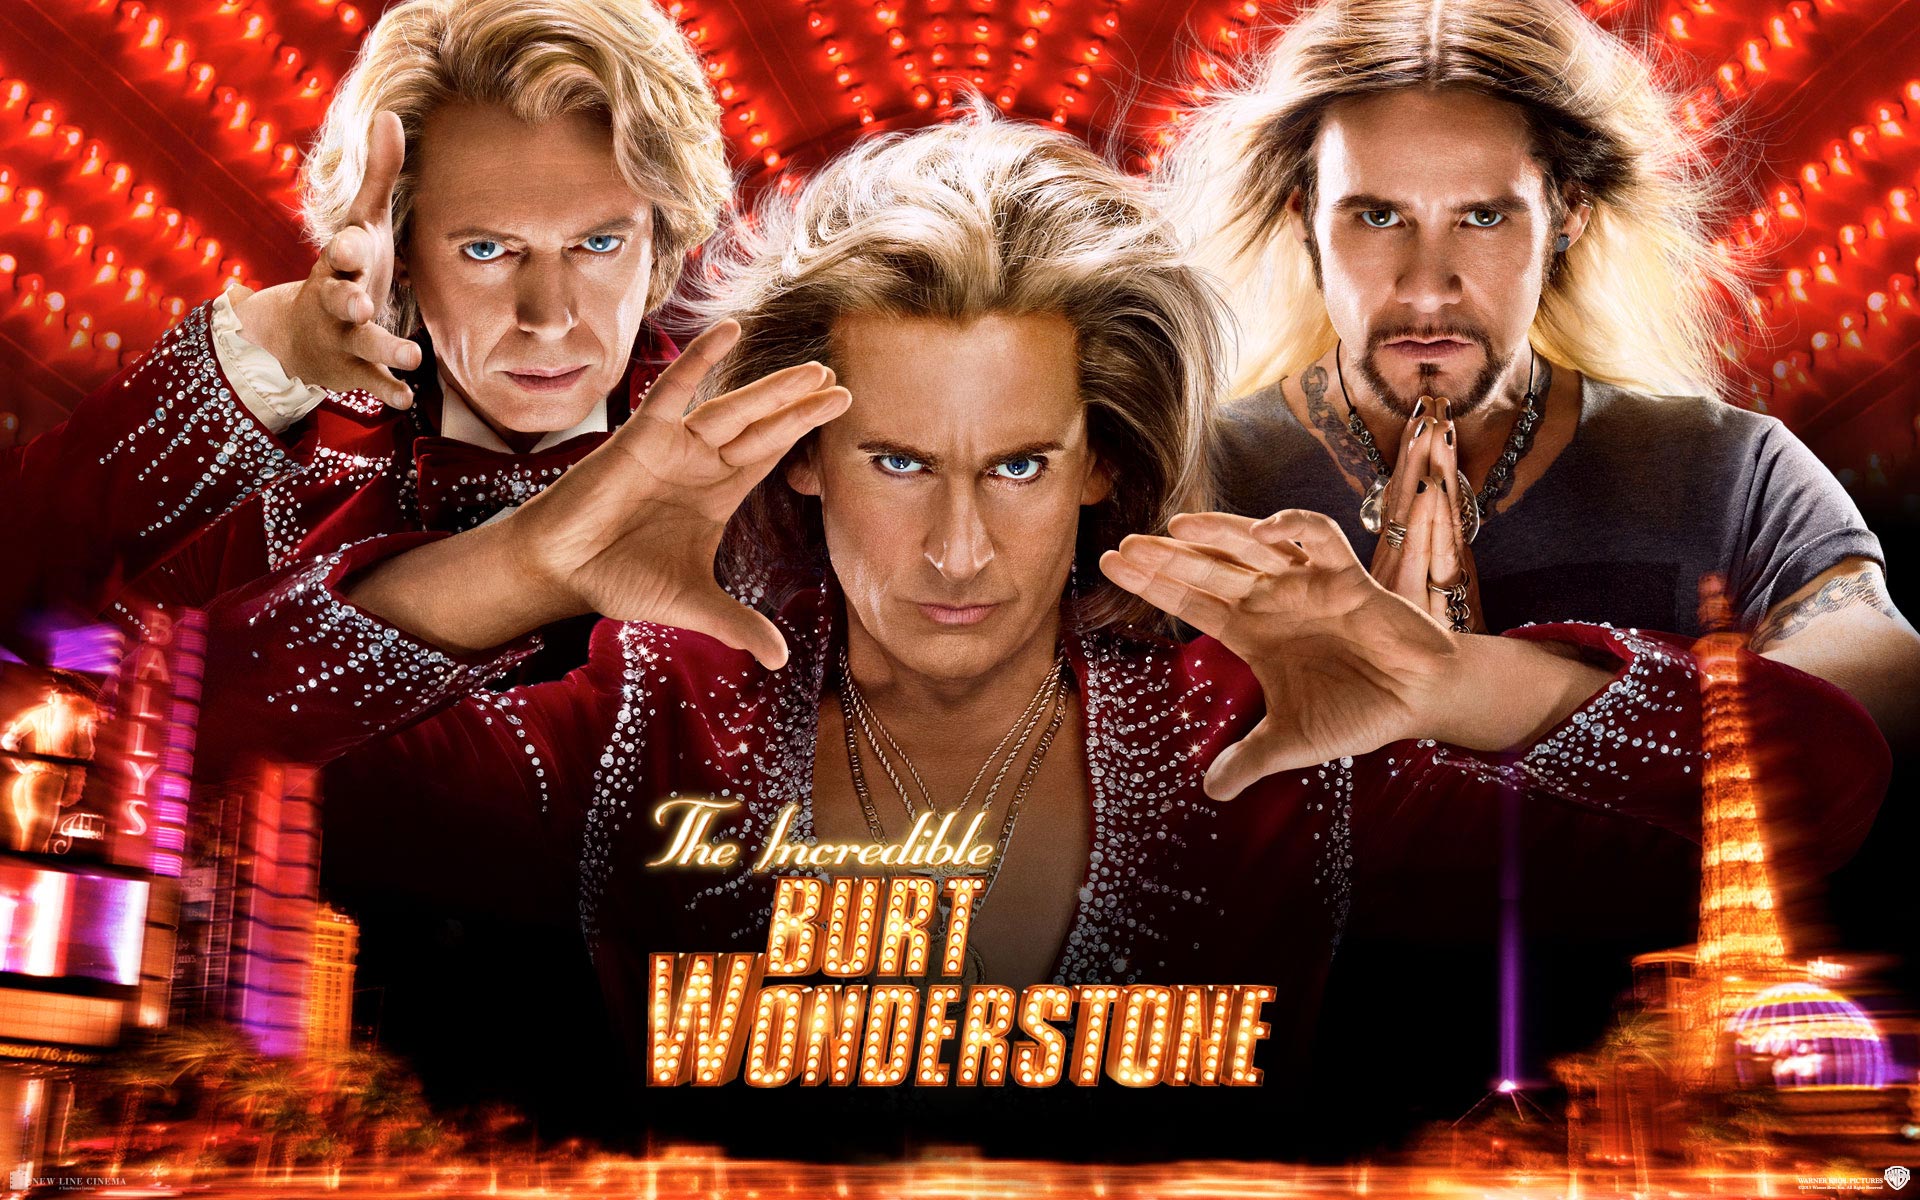 The Incredible Burt Wonderstone Movie